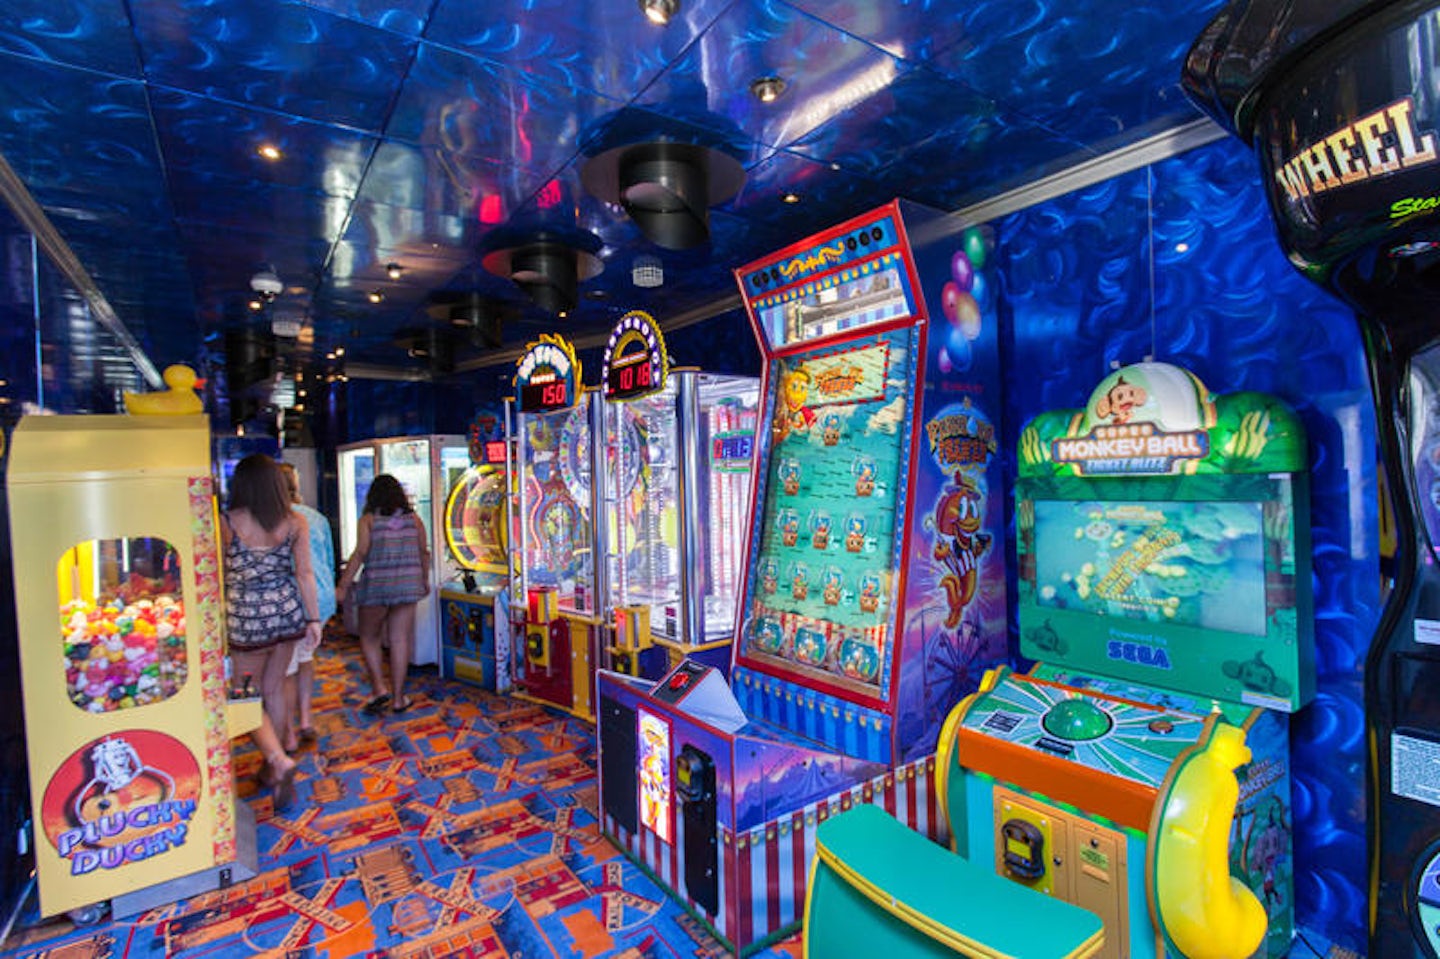 Caboose Video Arcade on Carnival Valor